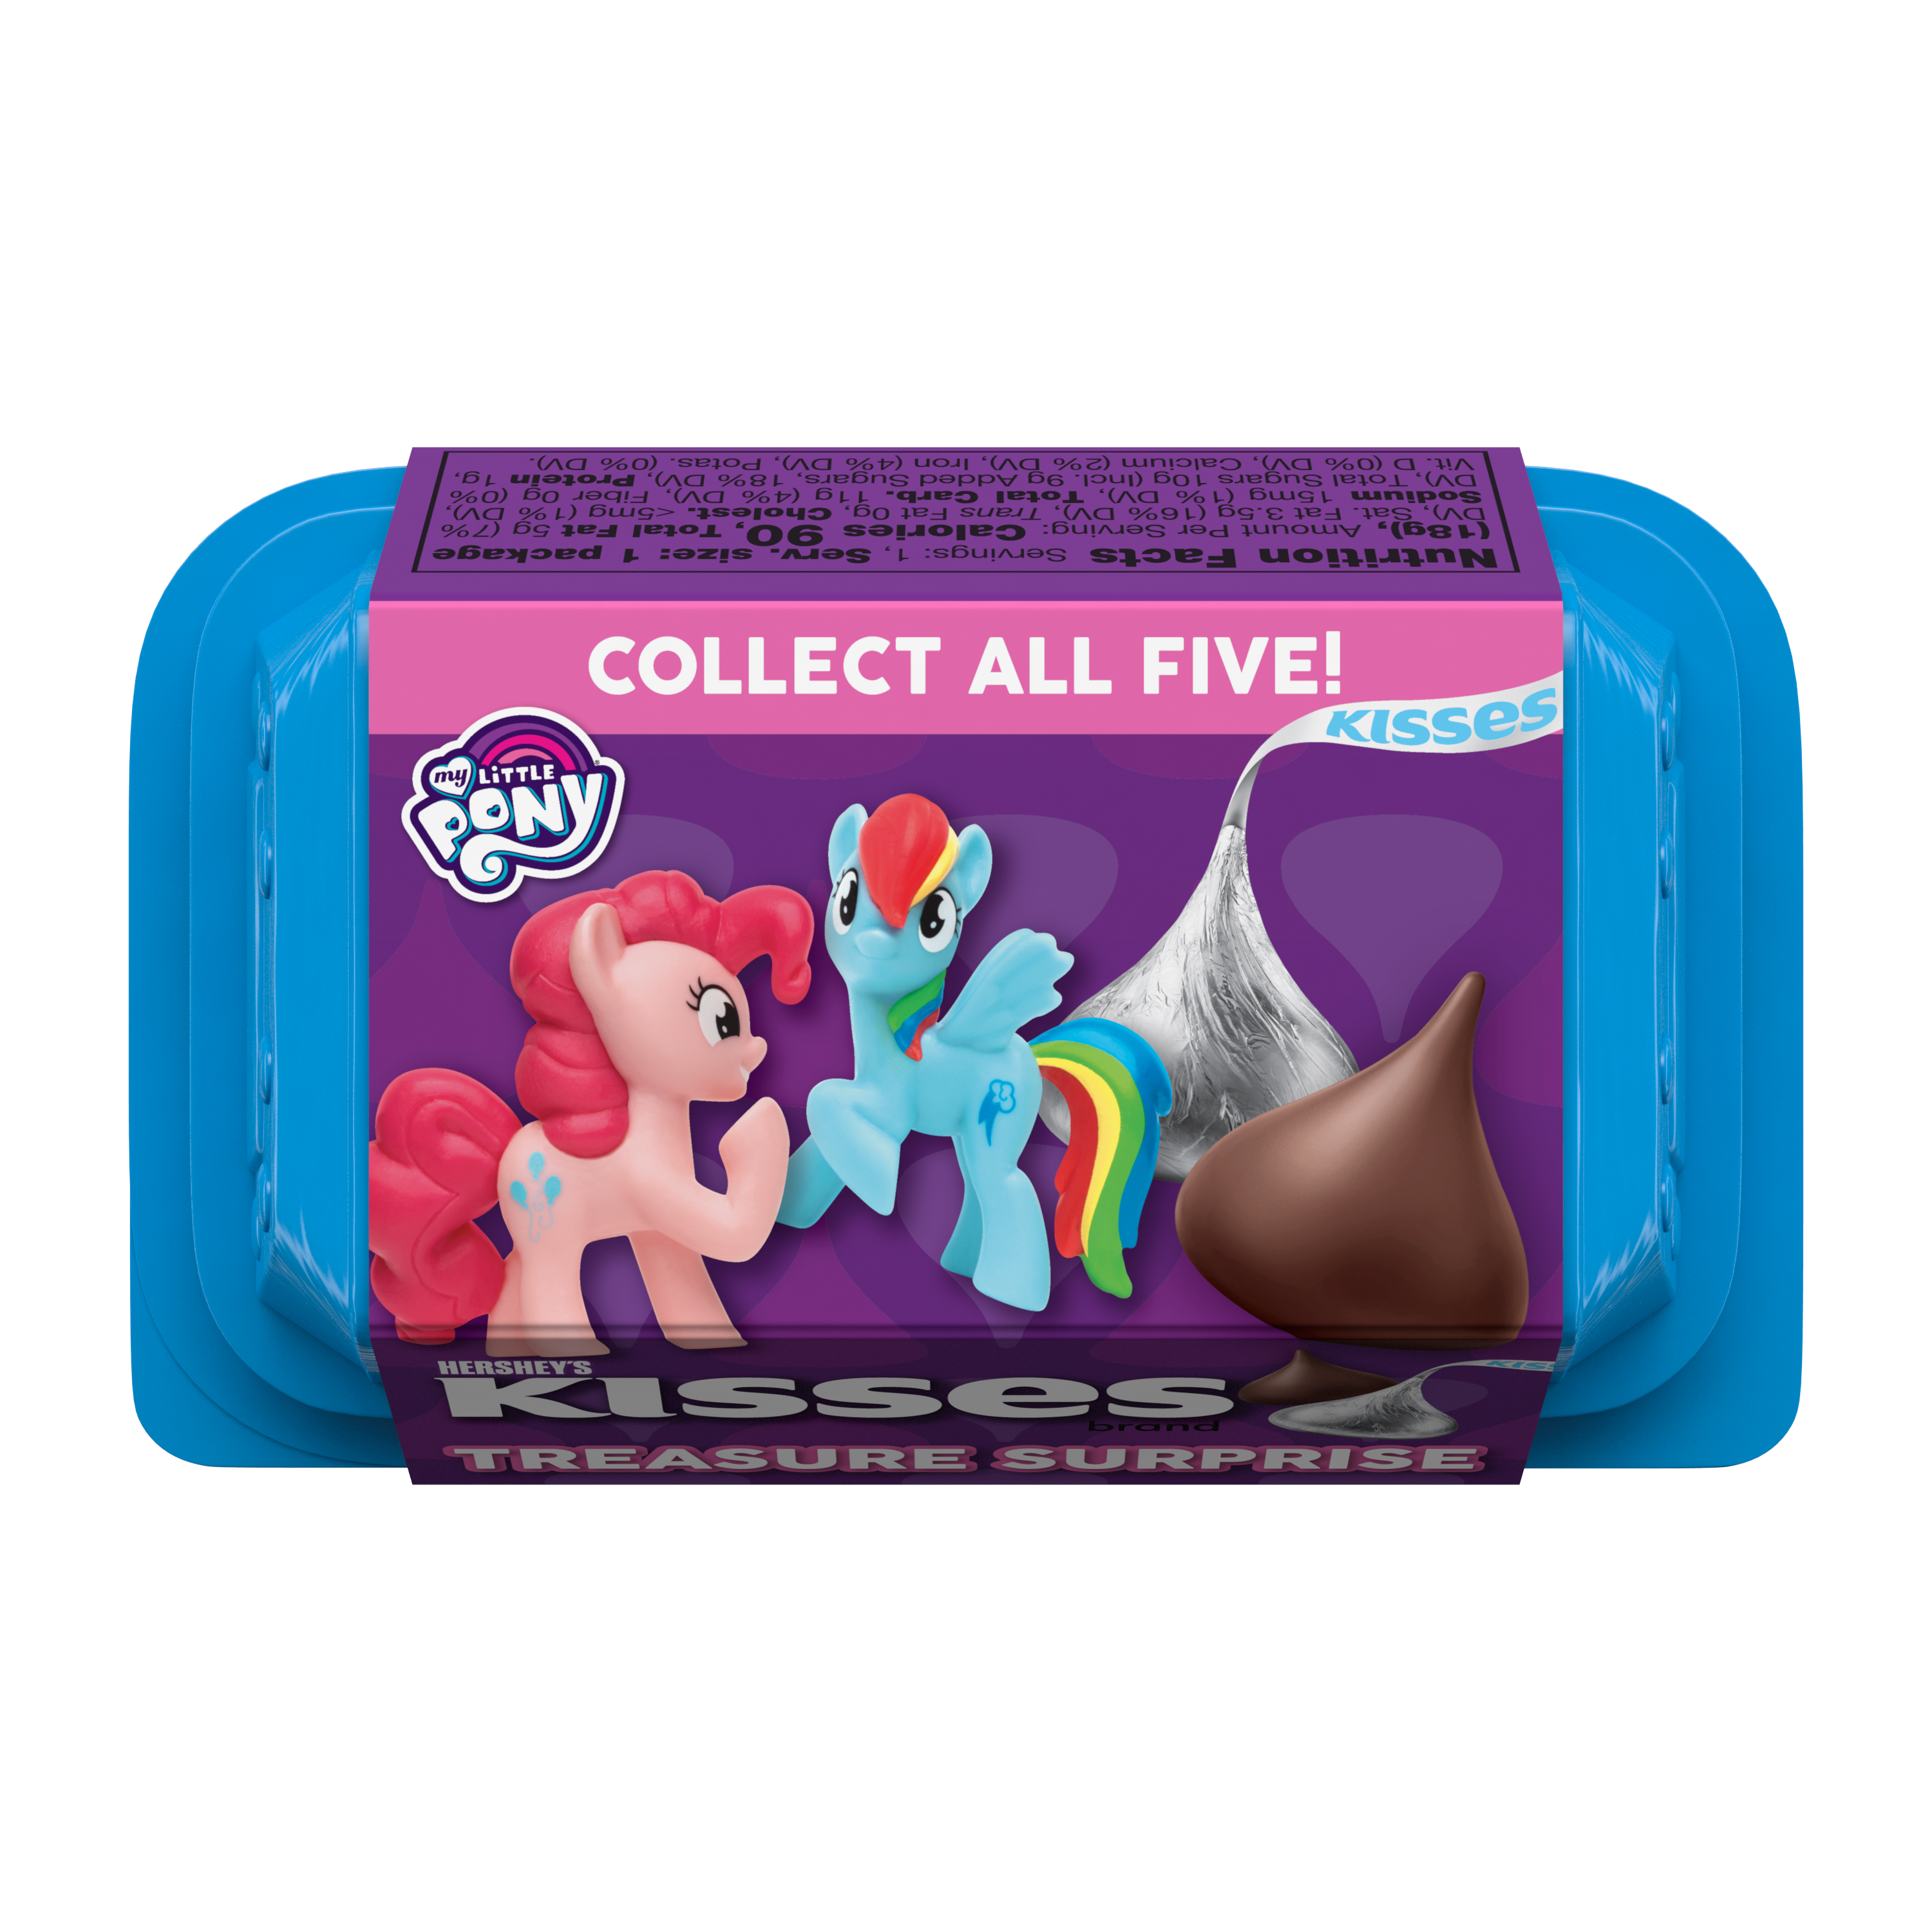 HERSHEY'S KISSES My Little Pony Milk Chocolate Treasure Surprise, 0.64 oz - Top of Package